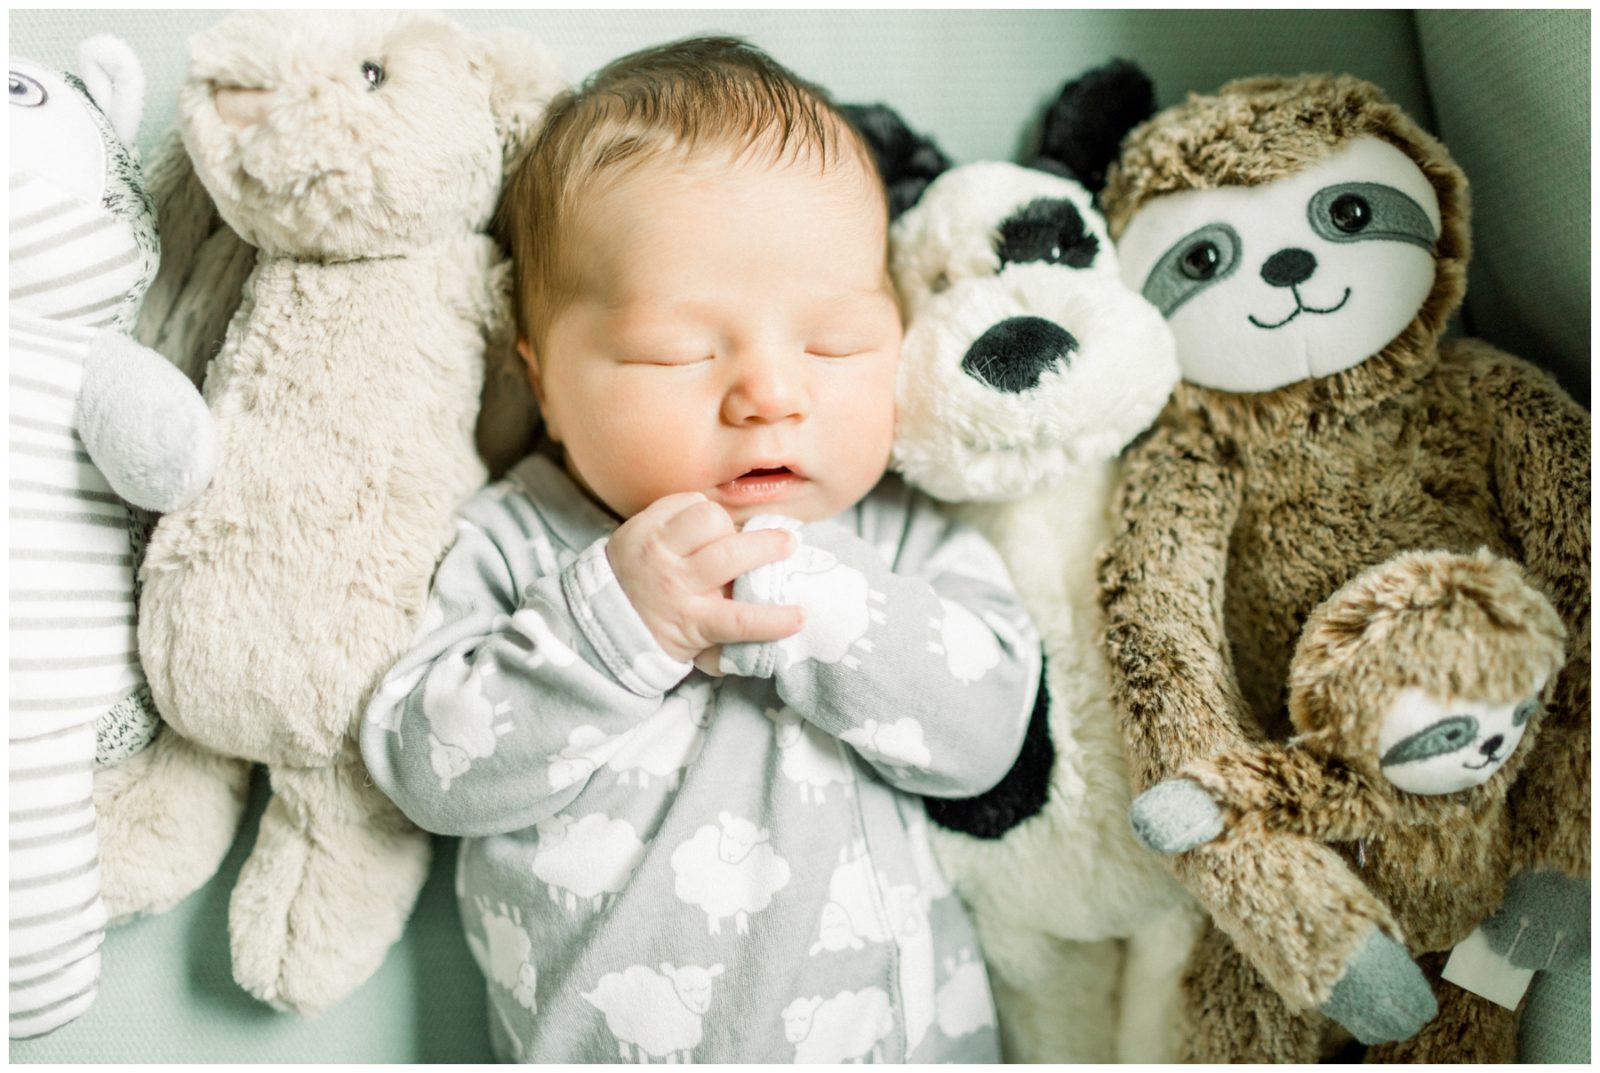 Newborn sleeping. Surrounded by cute stuffed animals.